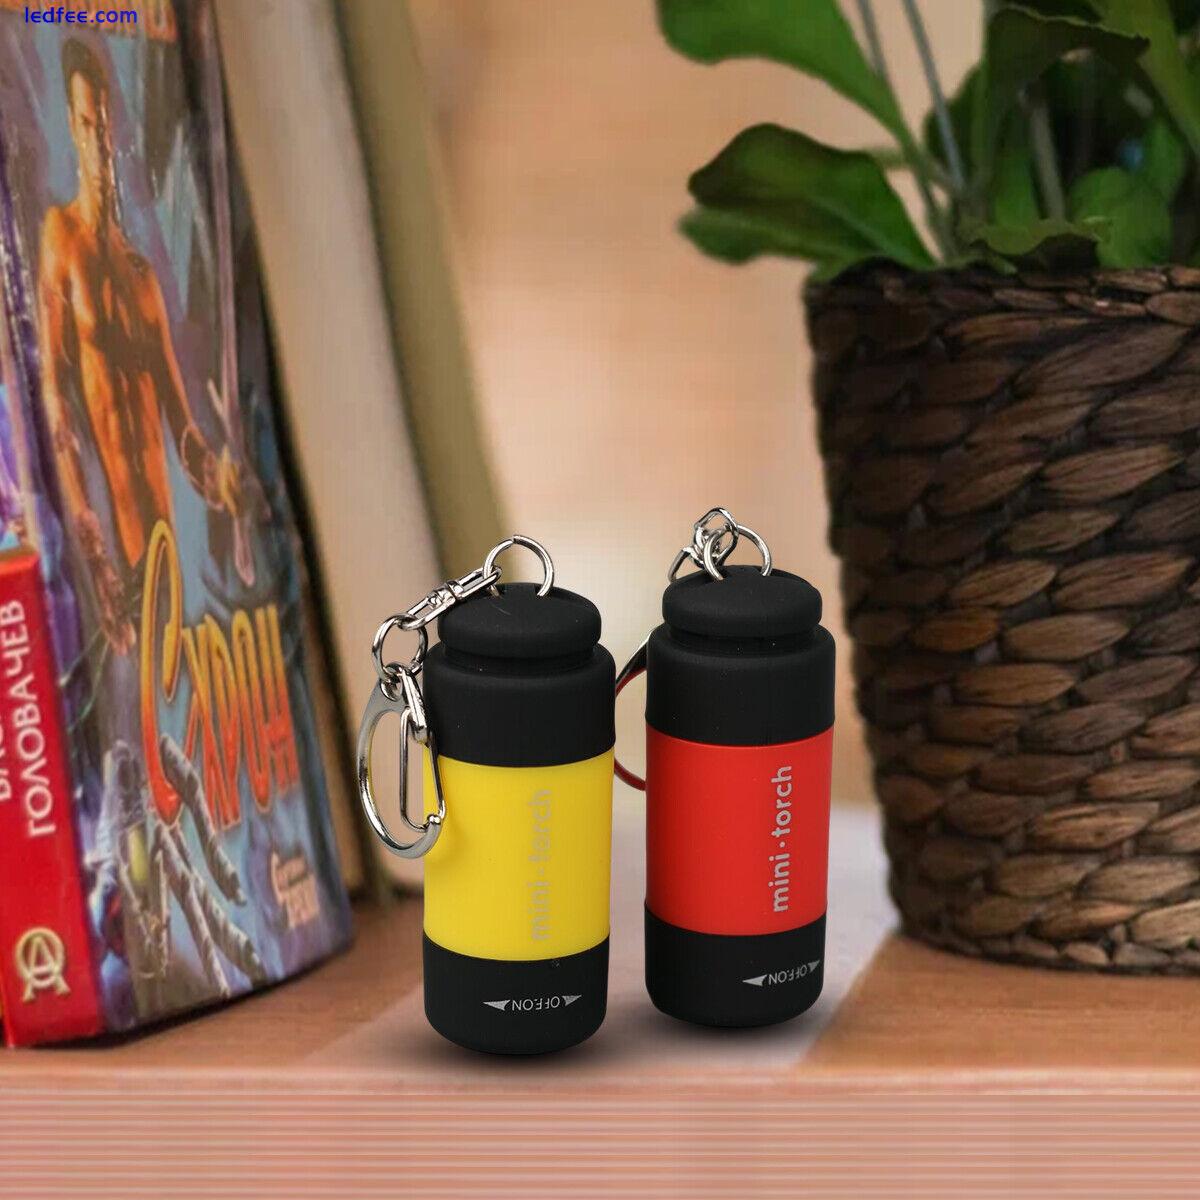 Rechargeable Waterproof USB LED Light Flashlight Lamp Mini Torch Pocket Keychain 4 